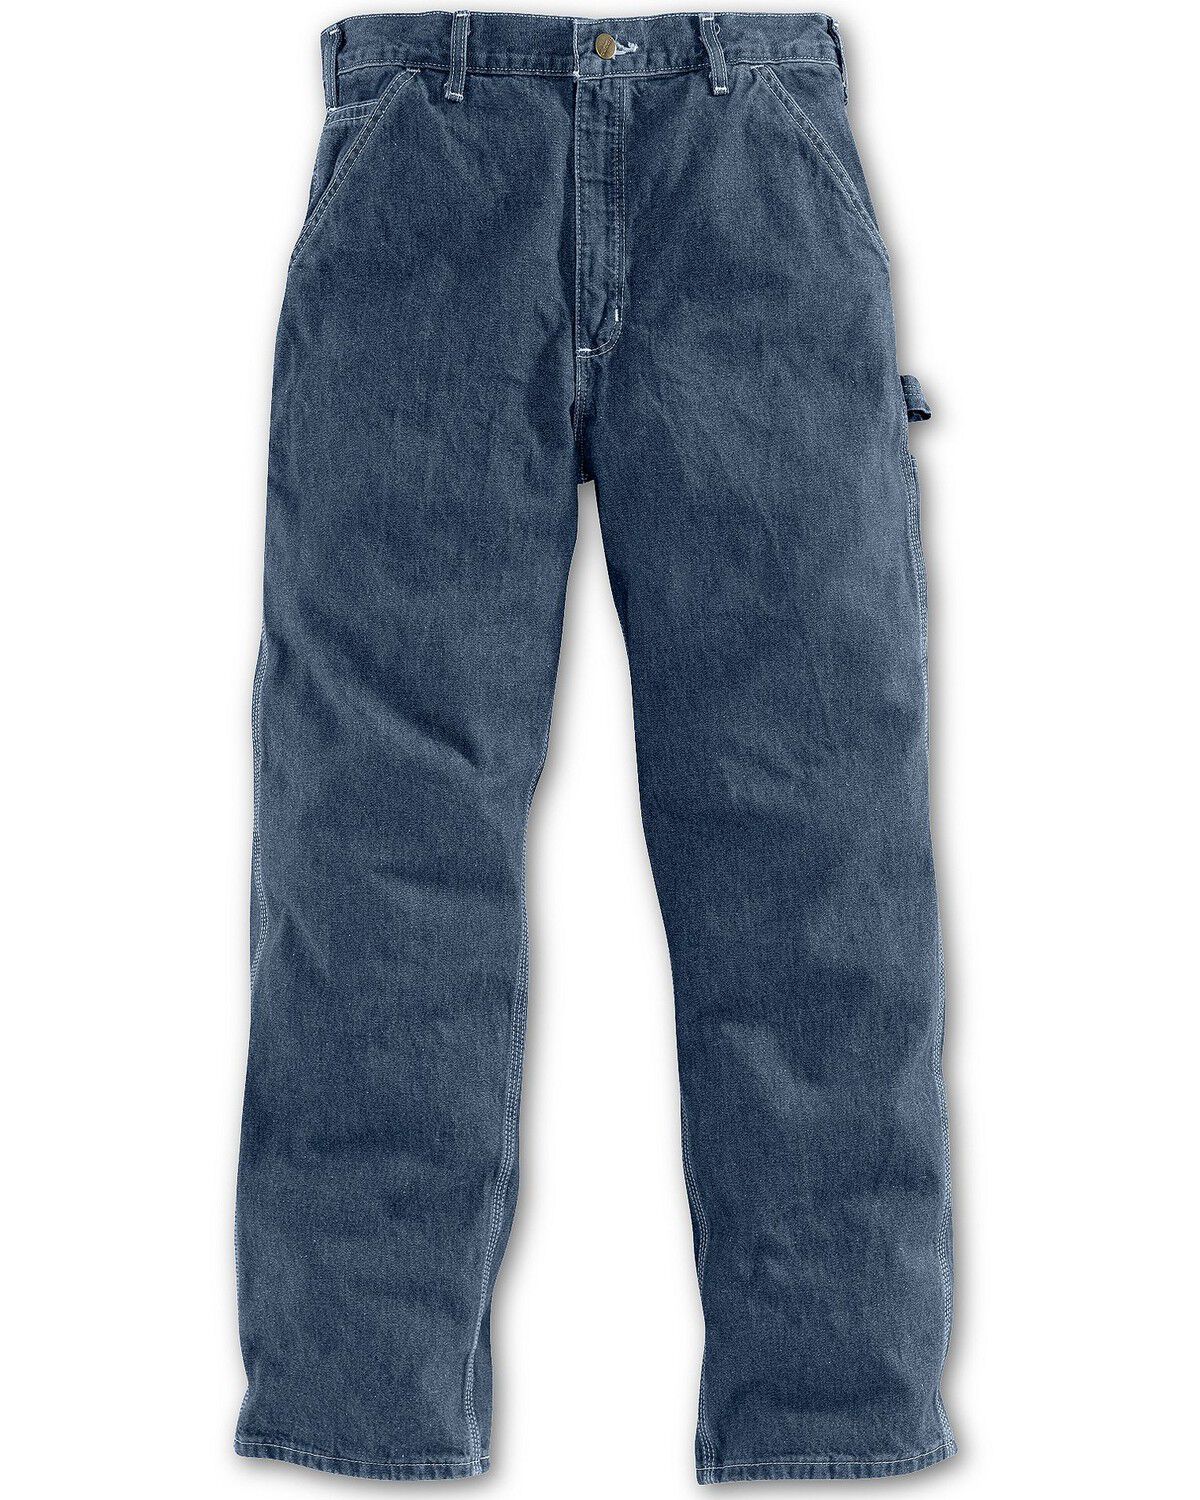 carhartt b237 jeans